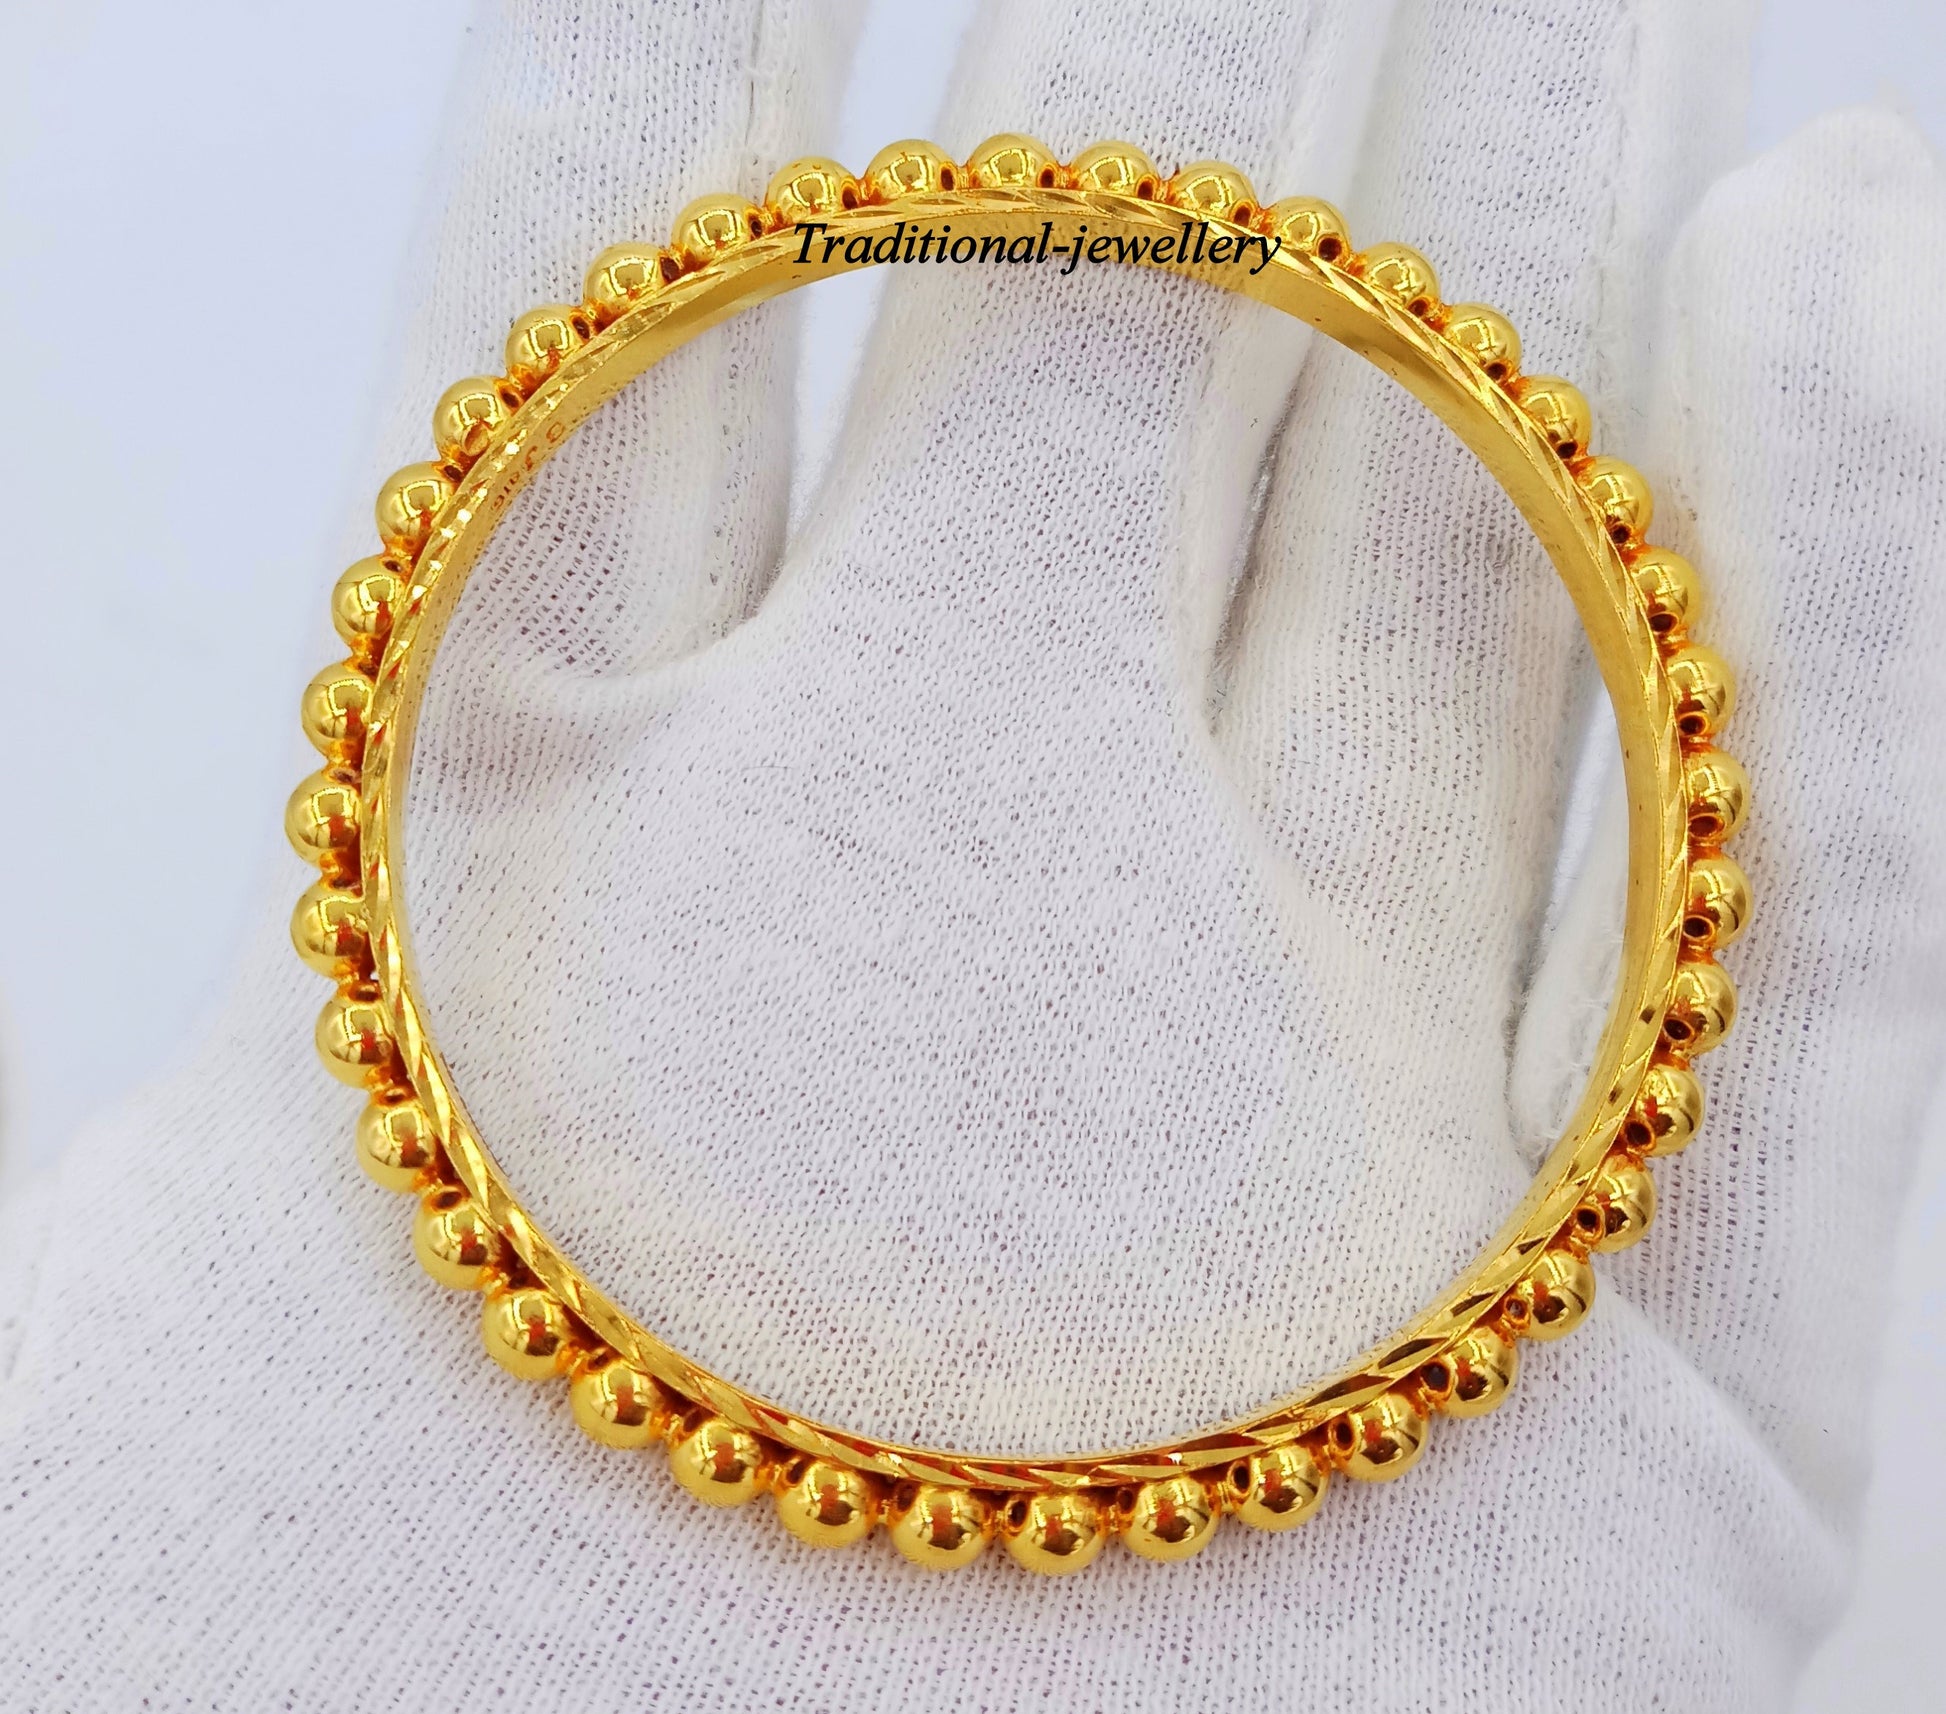 Vintage antique style handmade 22kt yellow gold bangle bracelet women's wedding anniversary Rajasthan kakan set jewelry - TRIBAL ORNAMENTS